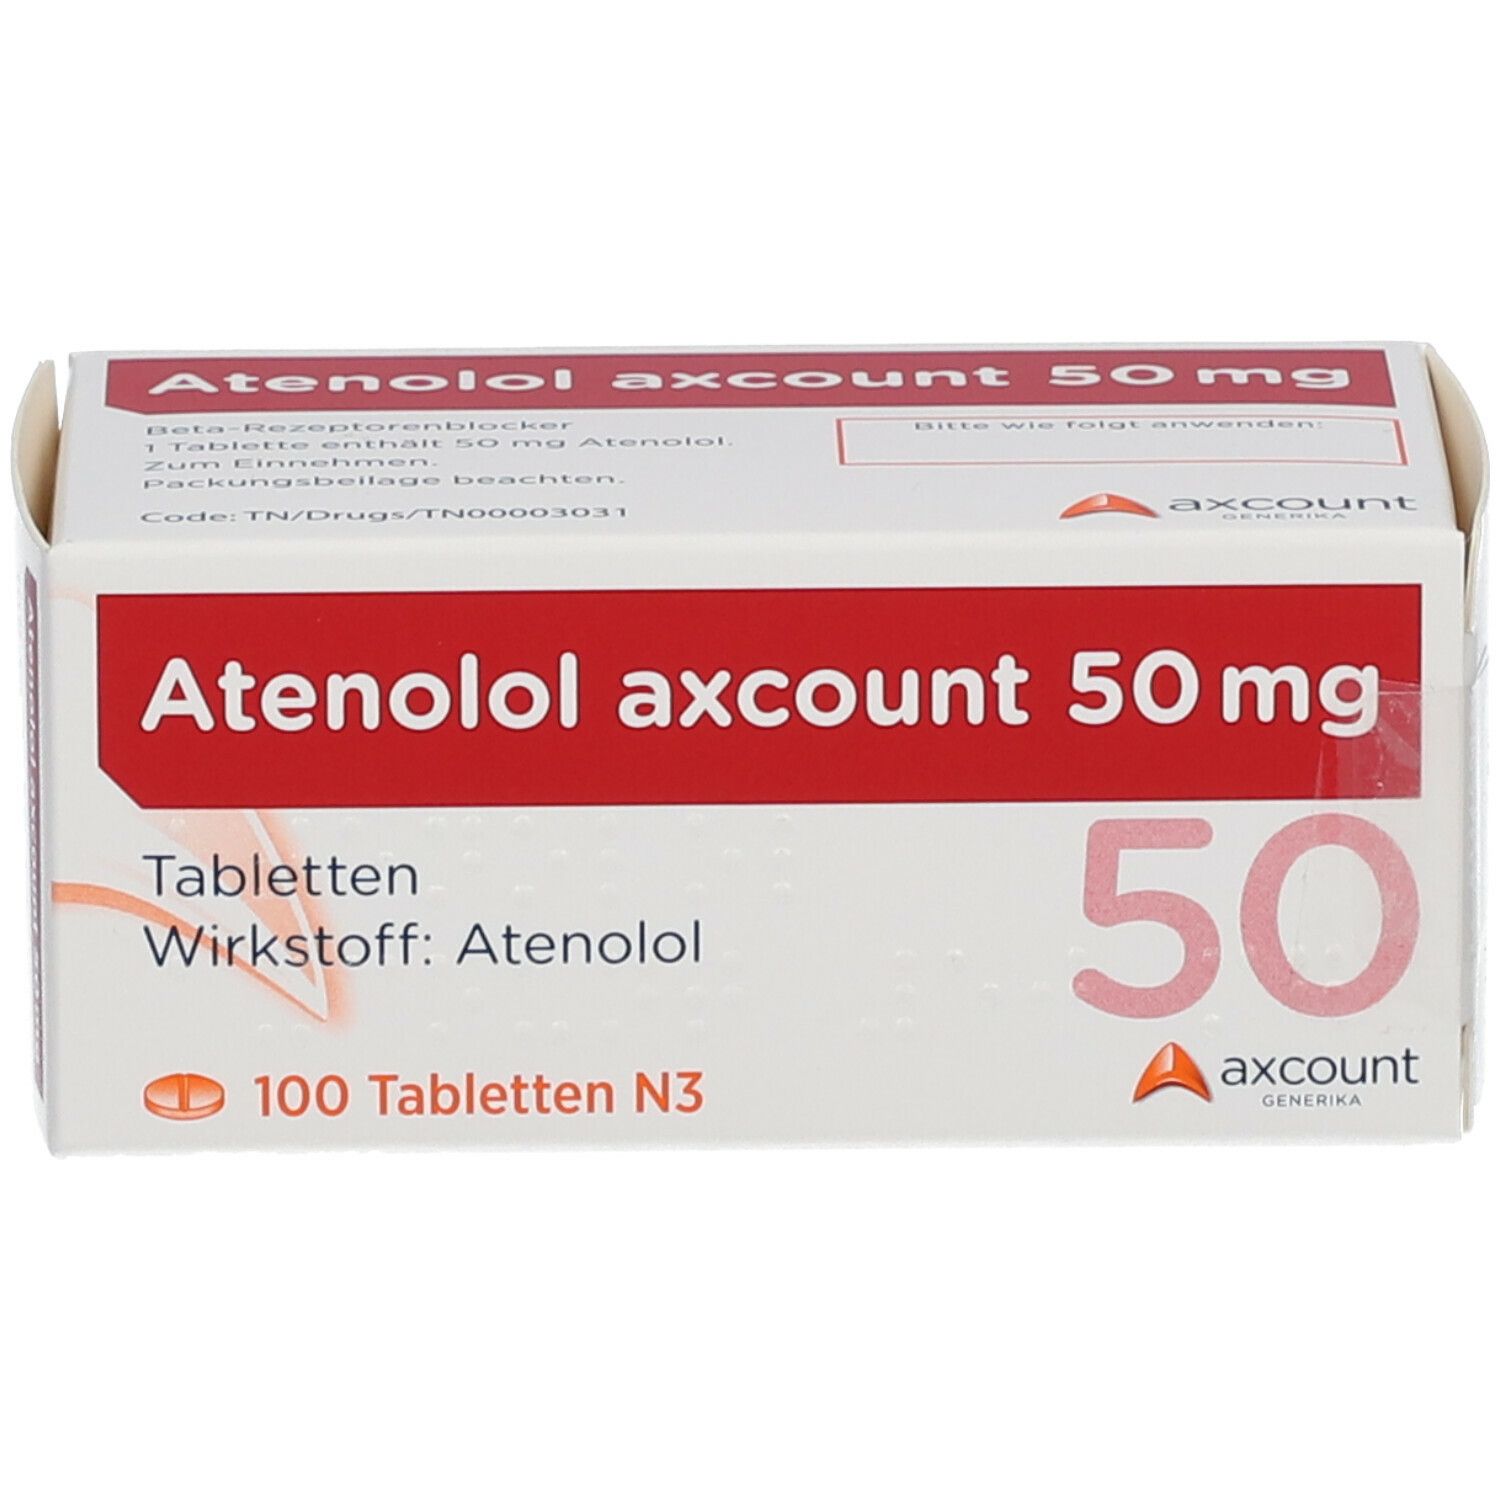 Atenolol axcount 50 mg